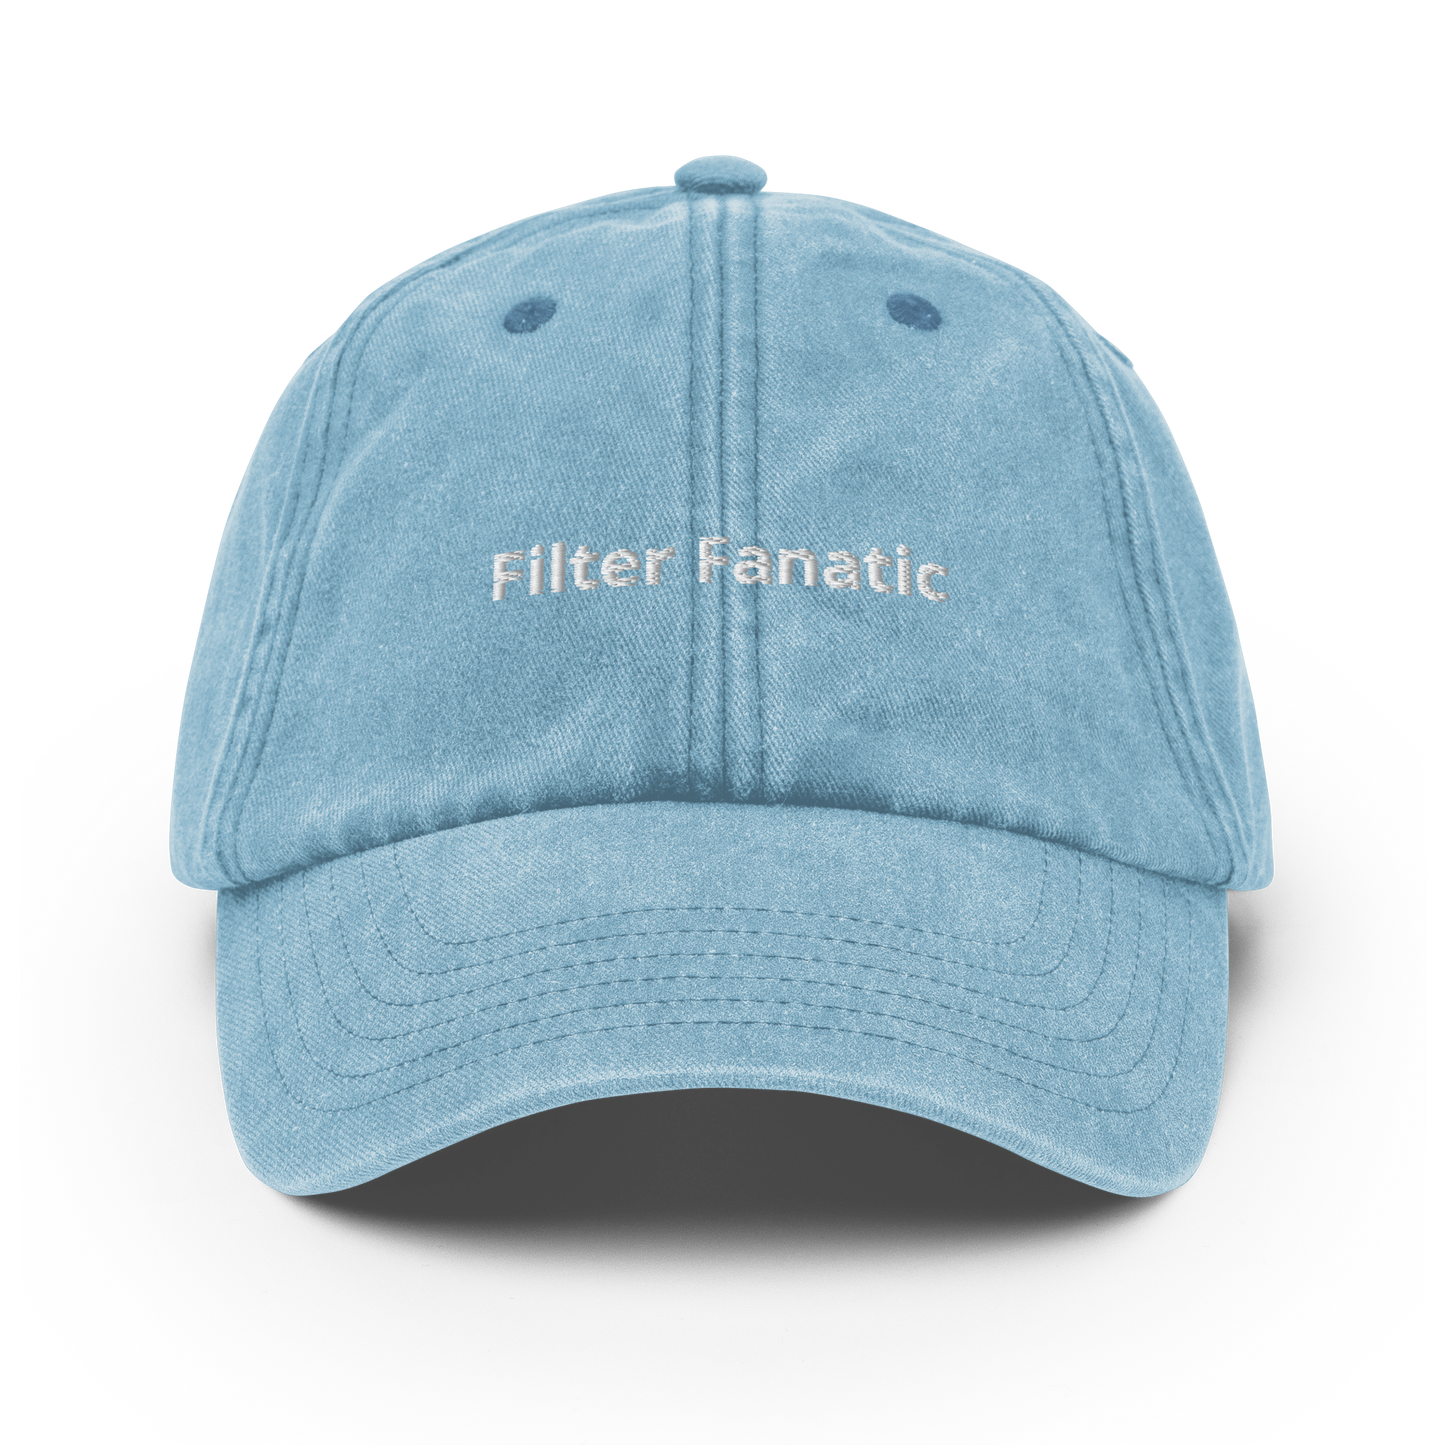 Filter Fanatic - Vintage Hat